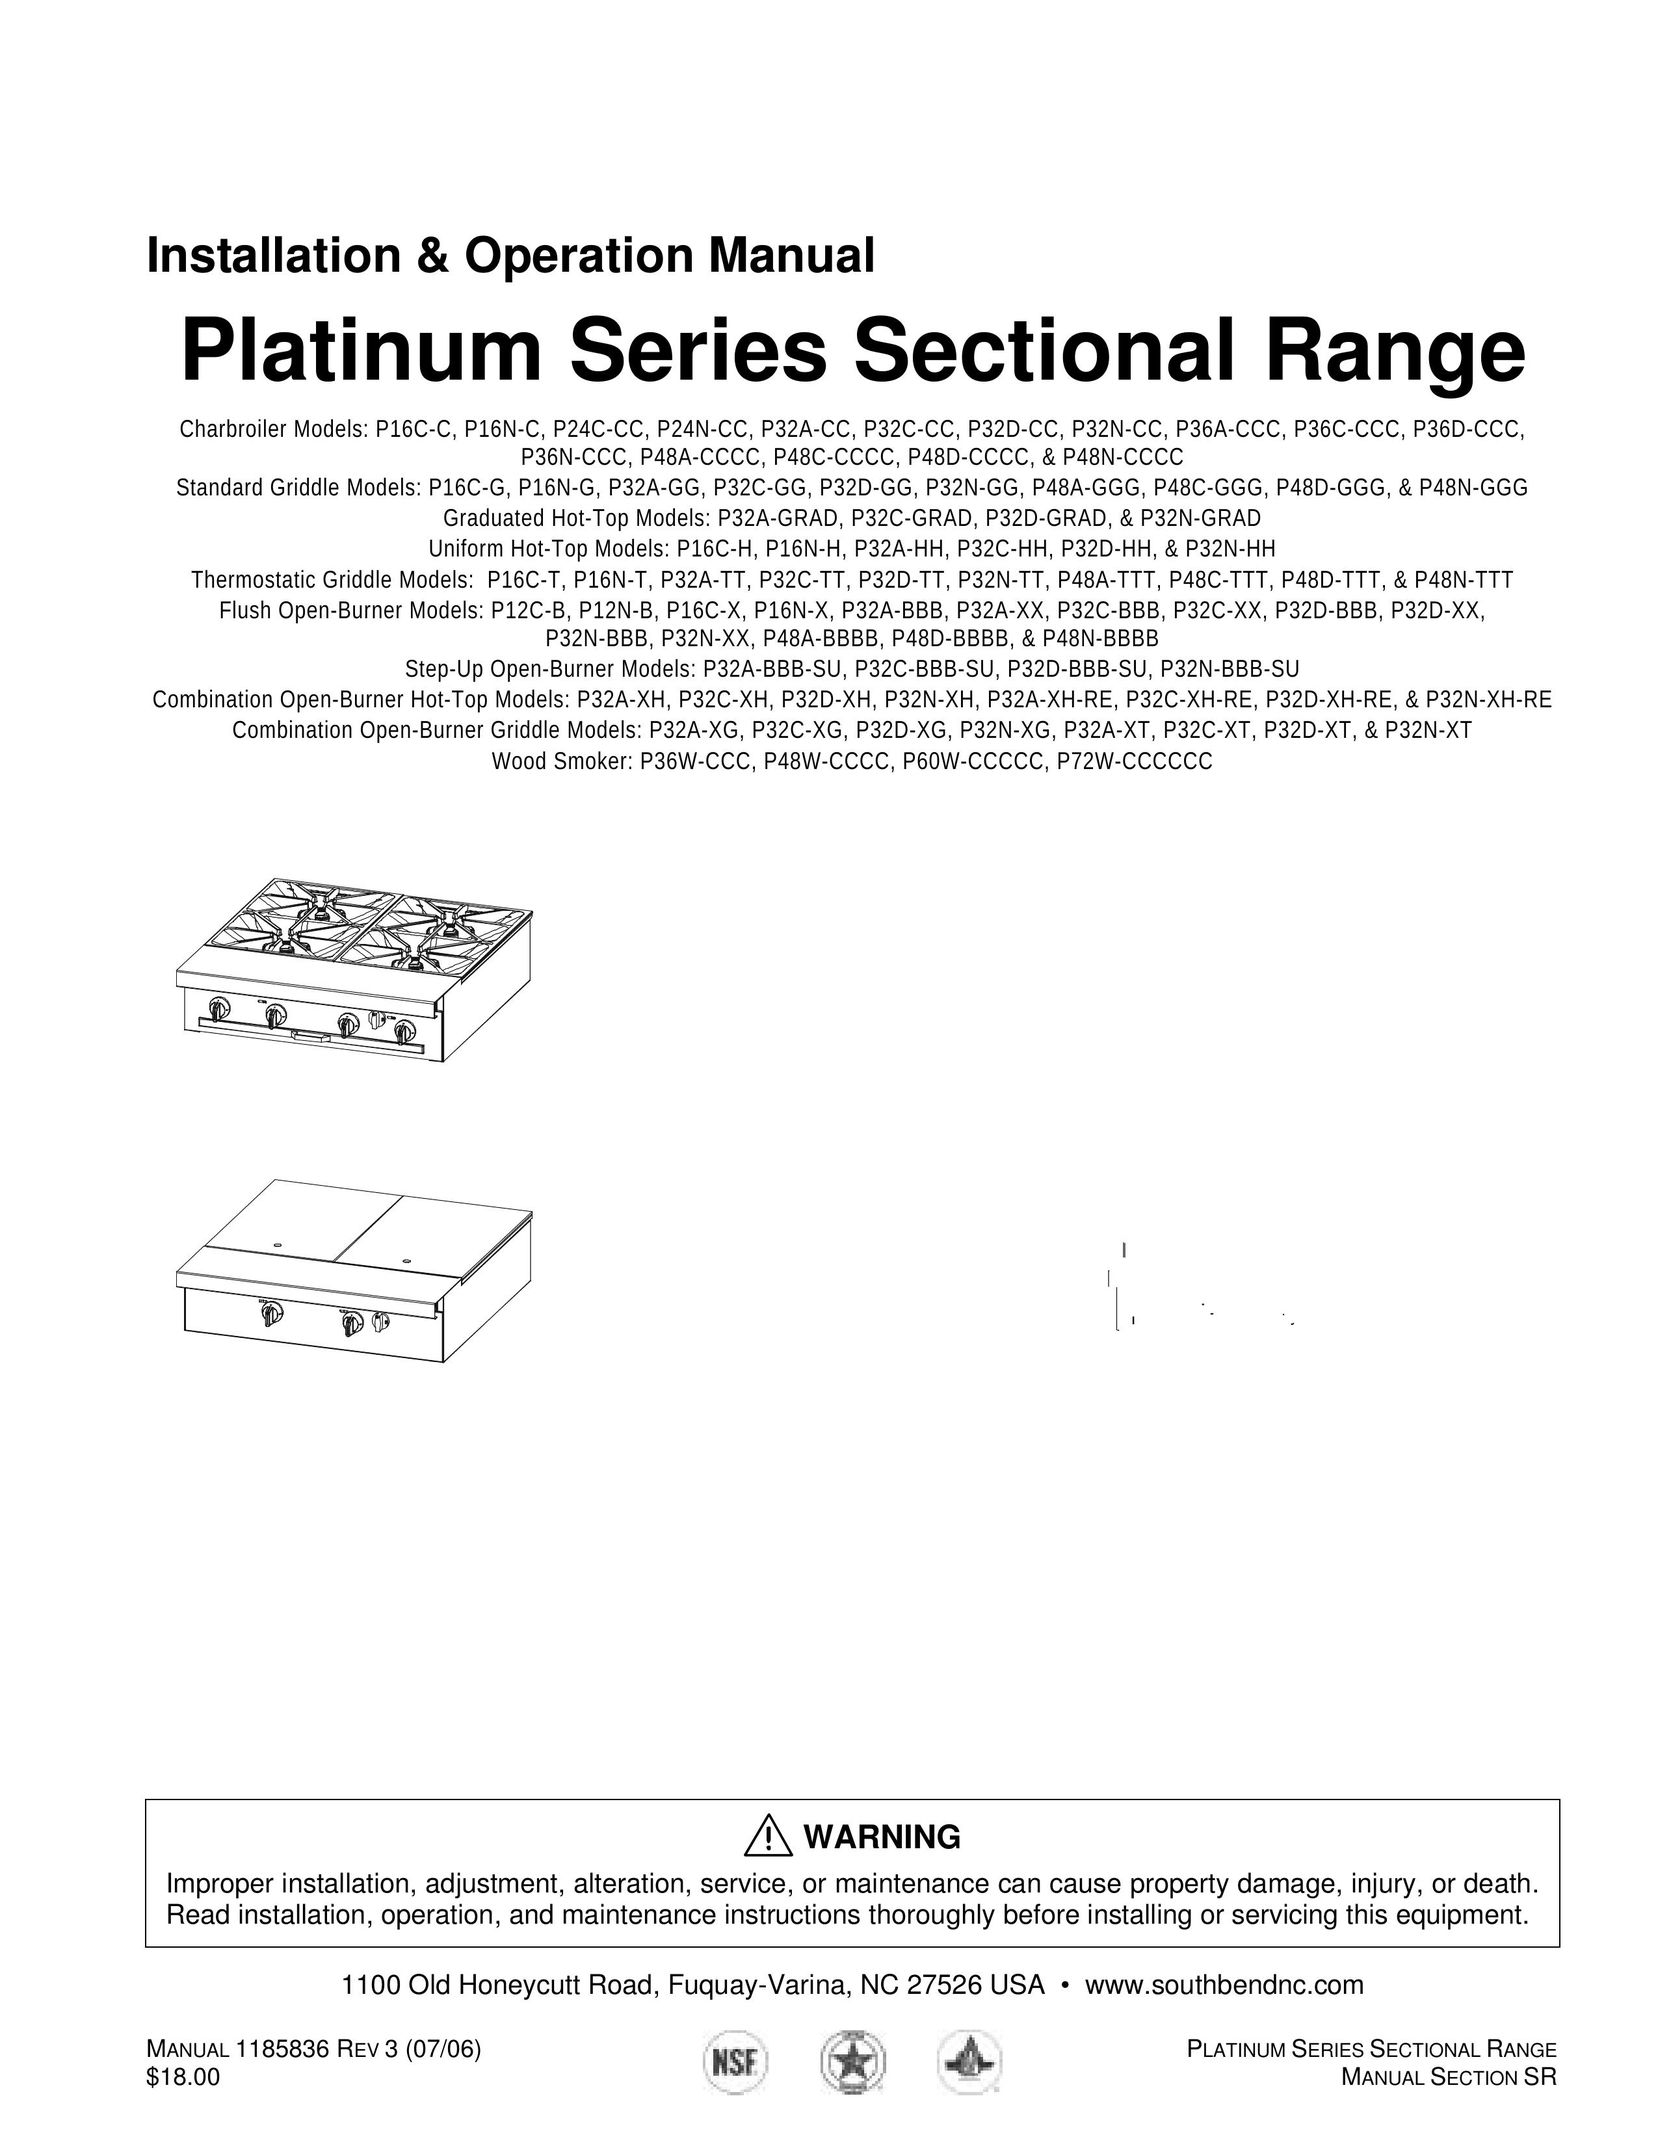 Southbend P16C-G Range User Manual